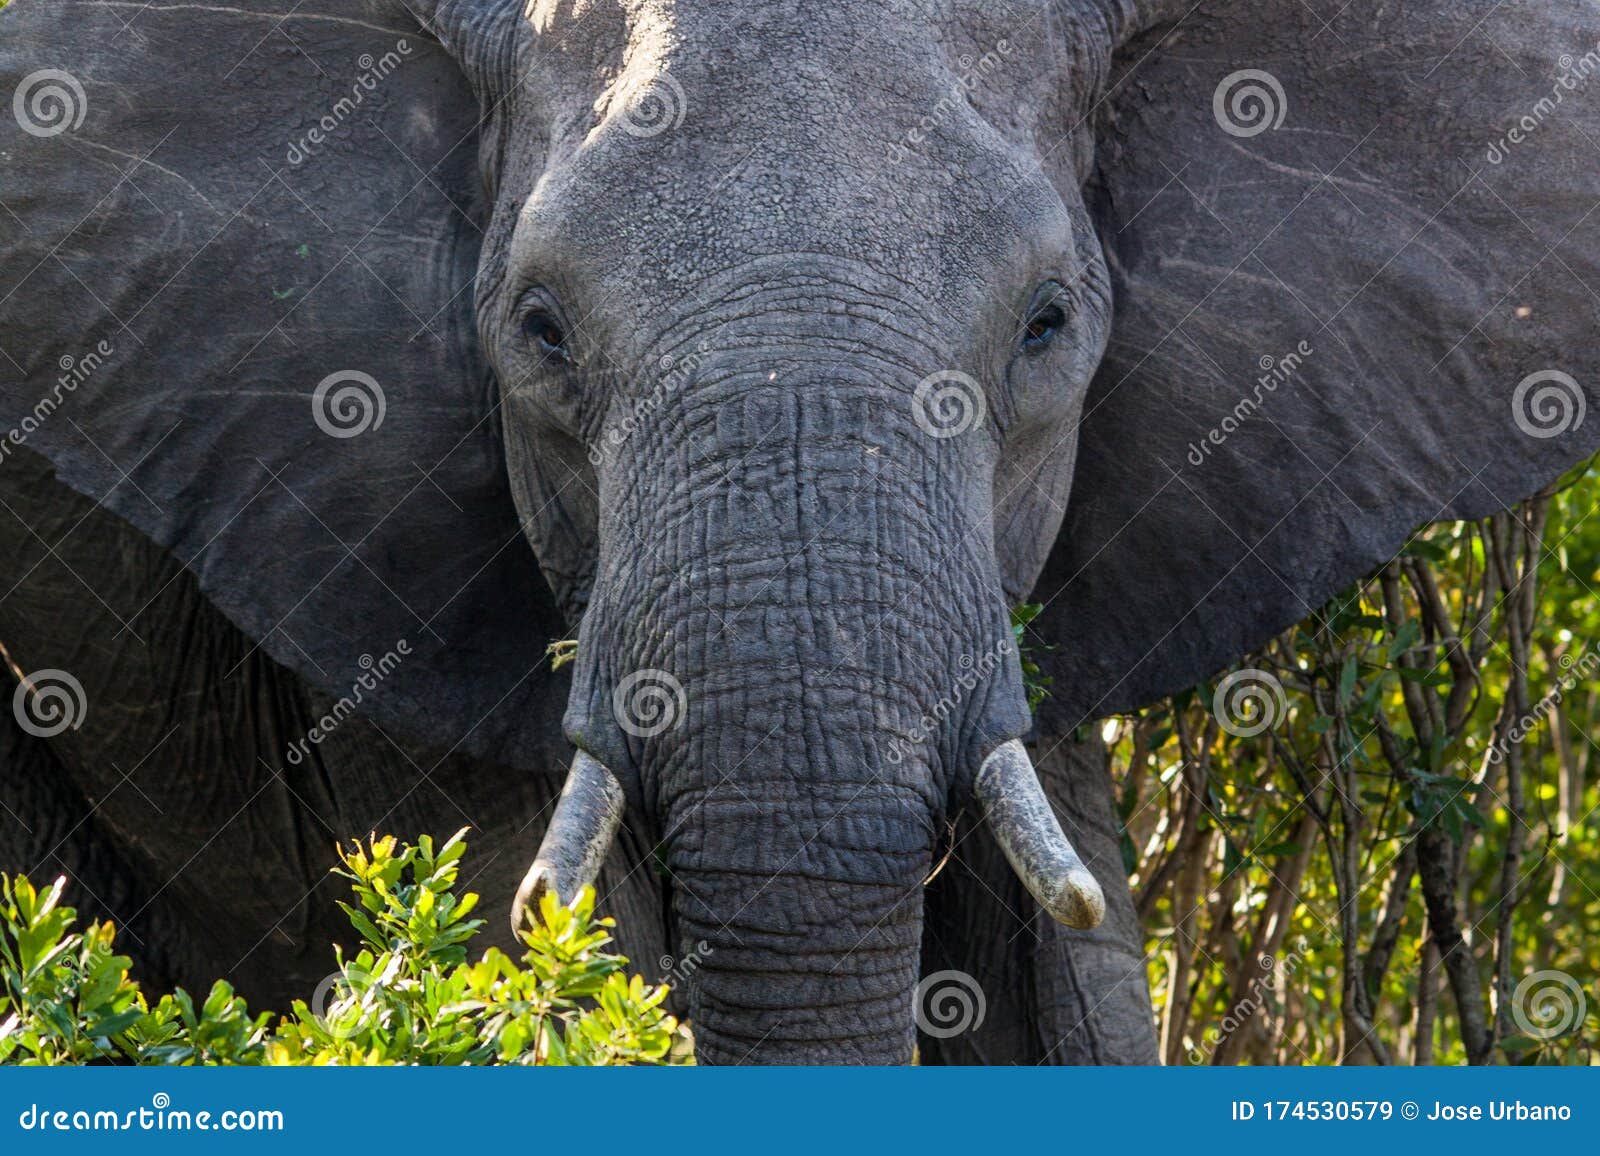 african elephant in kenia, elefante africano, safari, africa, wild animal, wild life, wild nature,